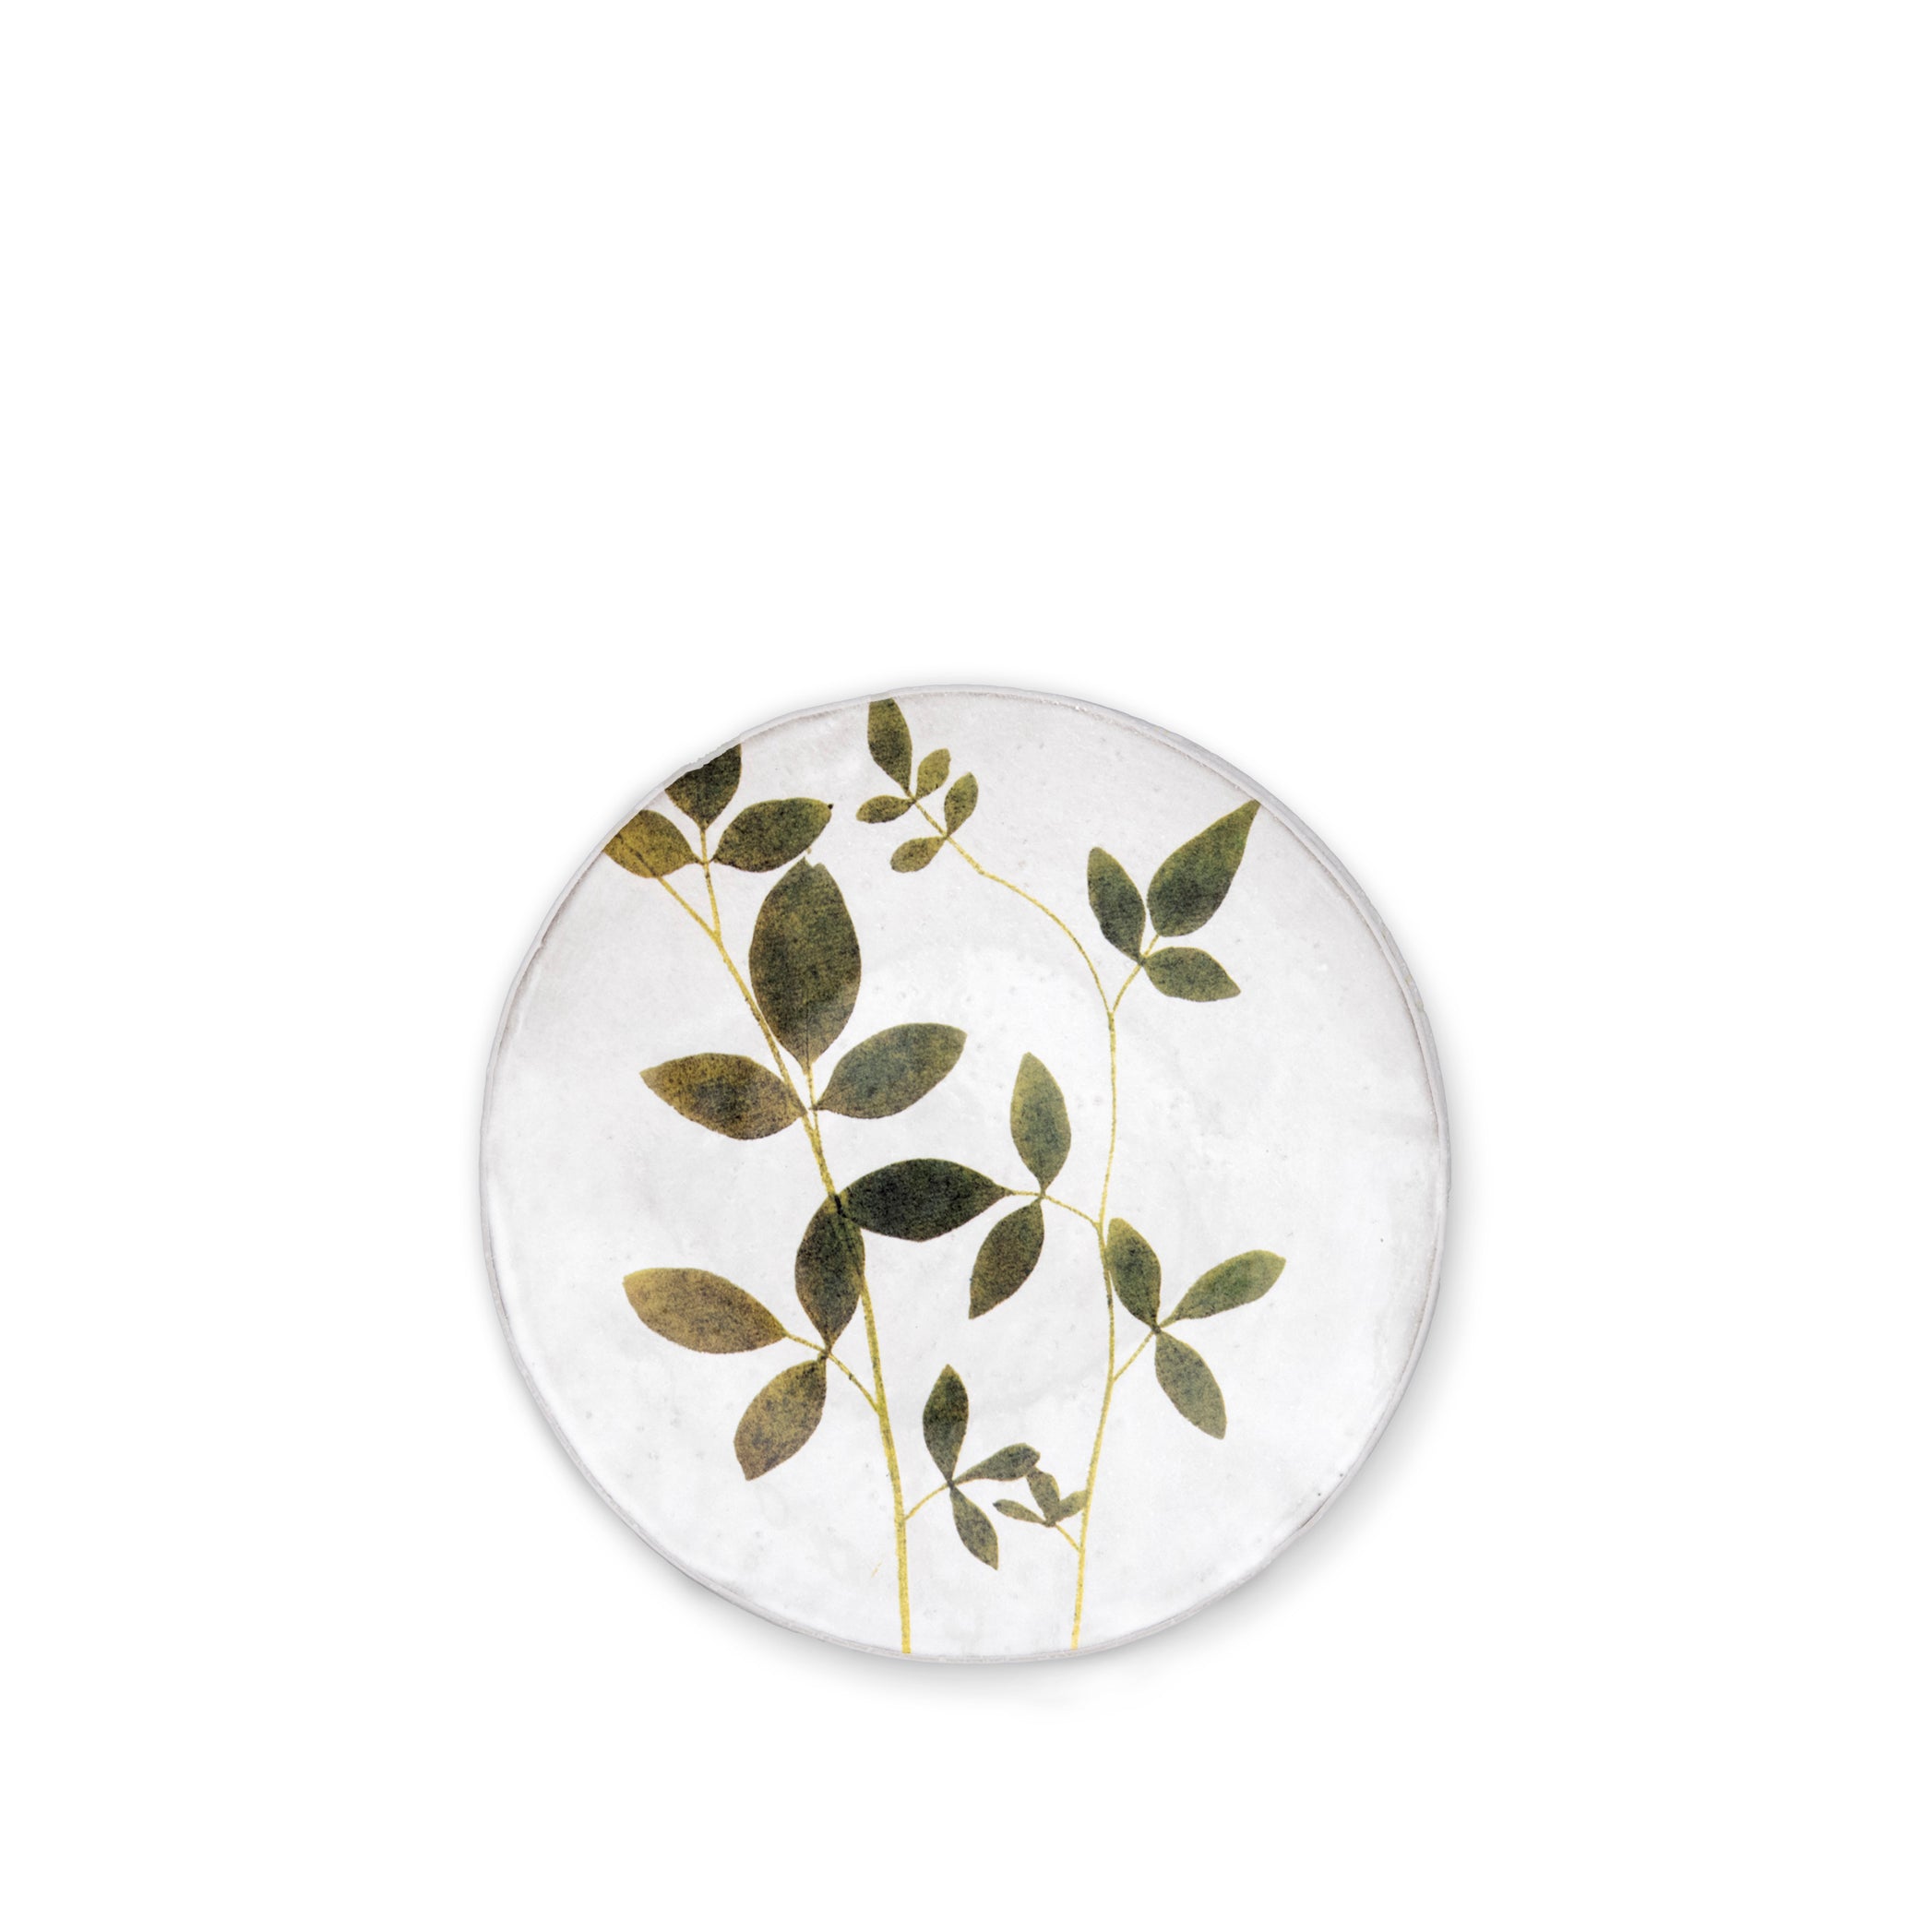 Jasminium Leaf Plate by Astier de Villatte, 24cm